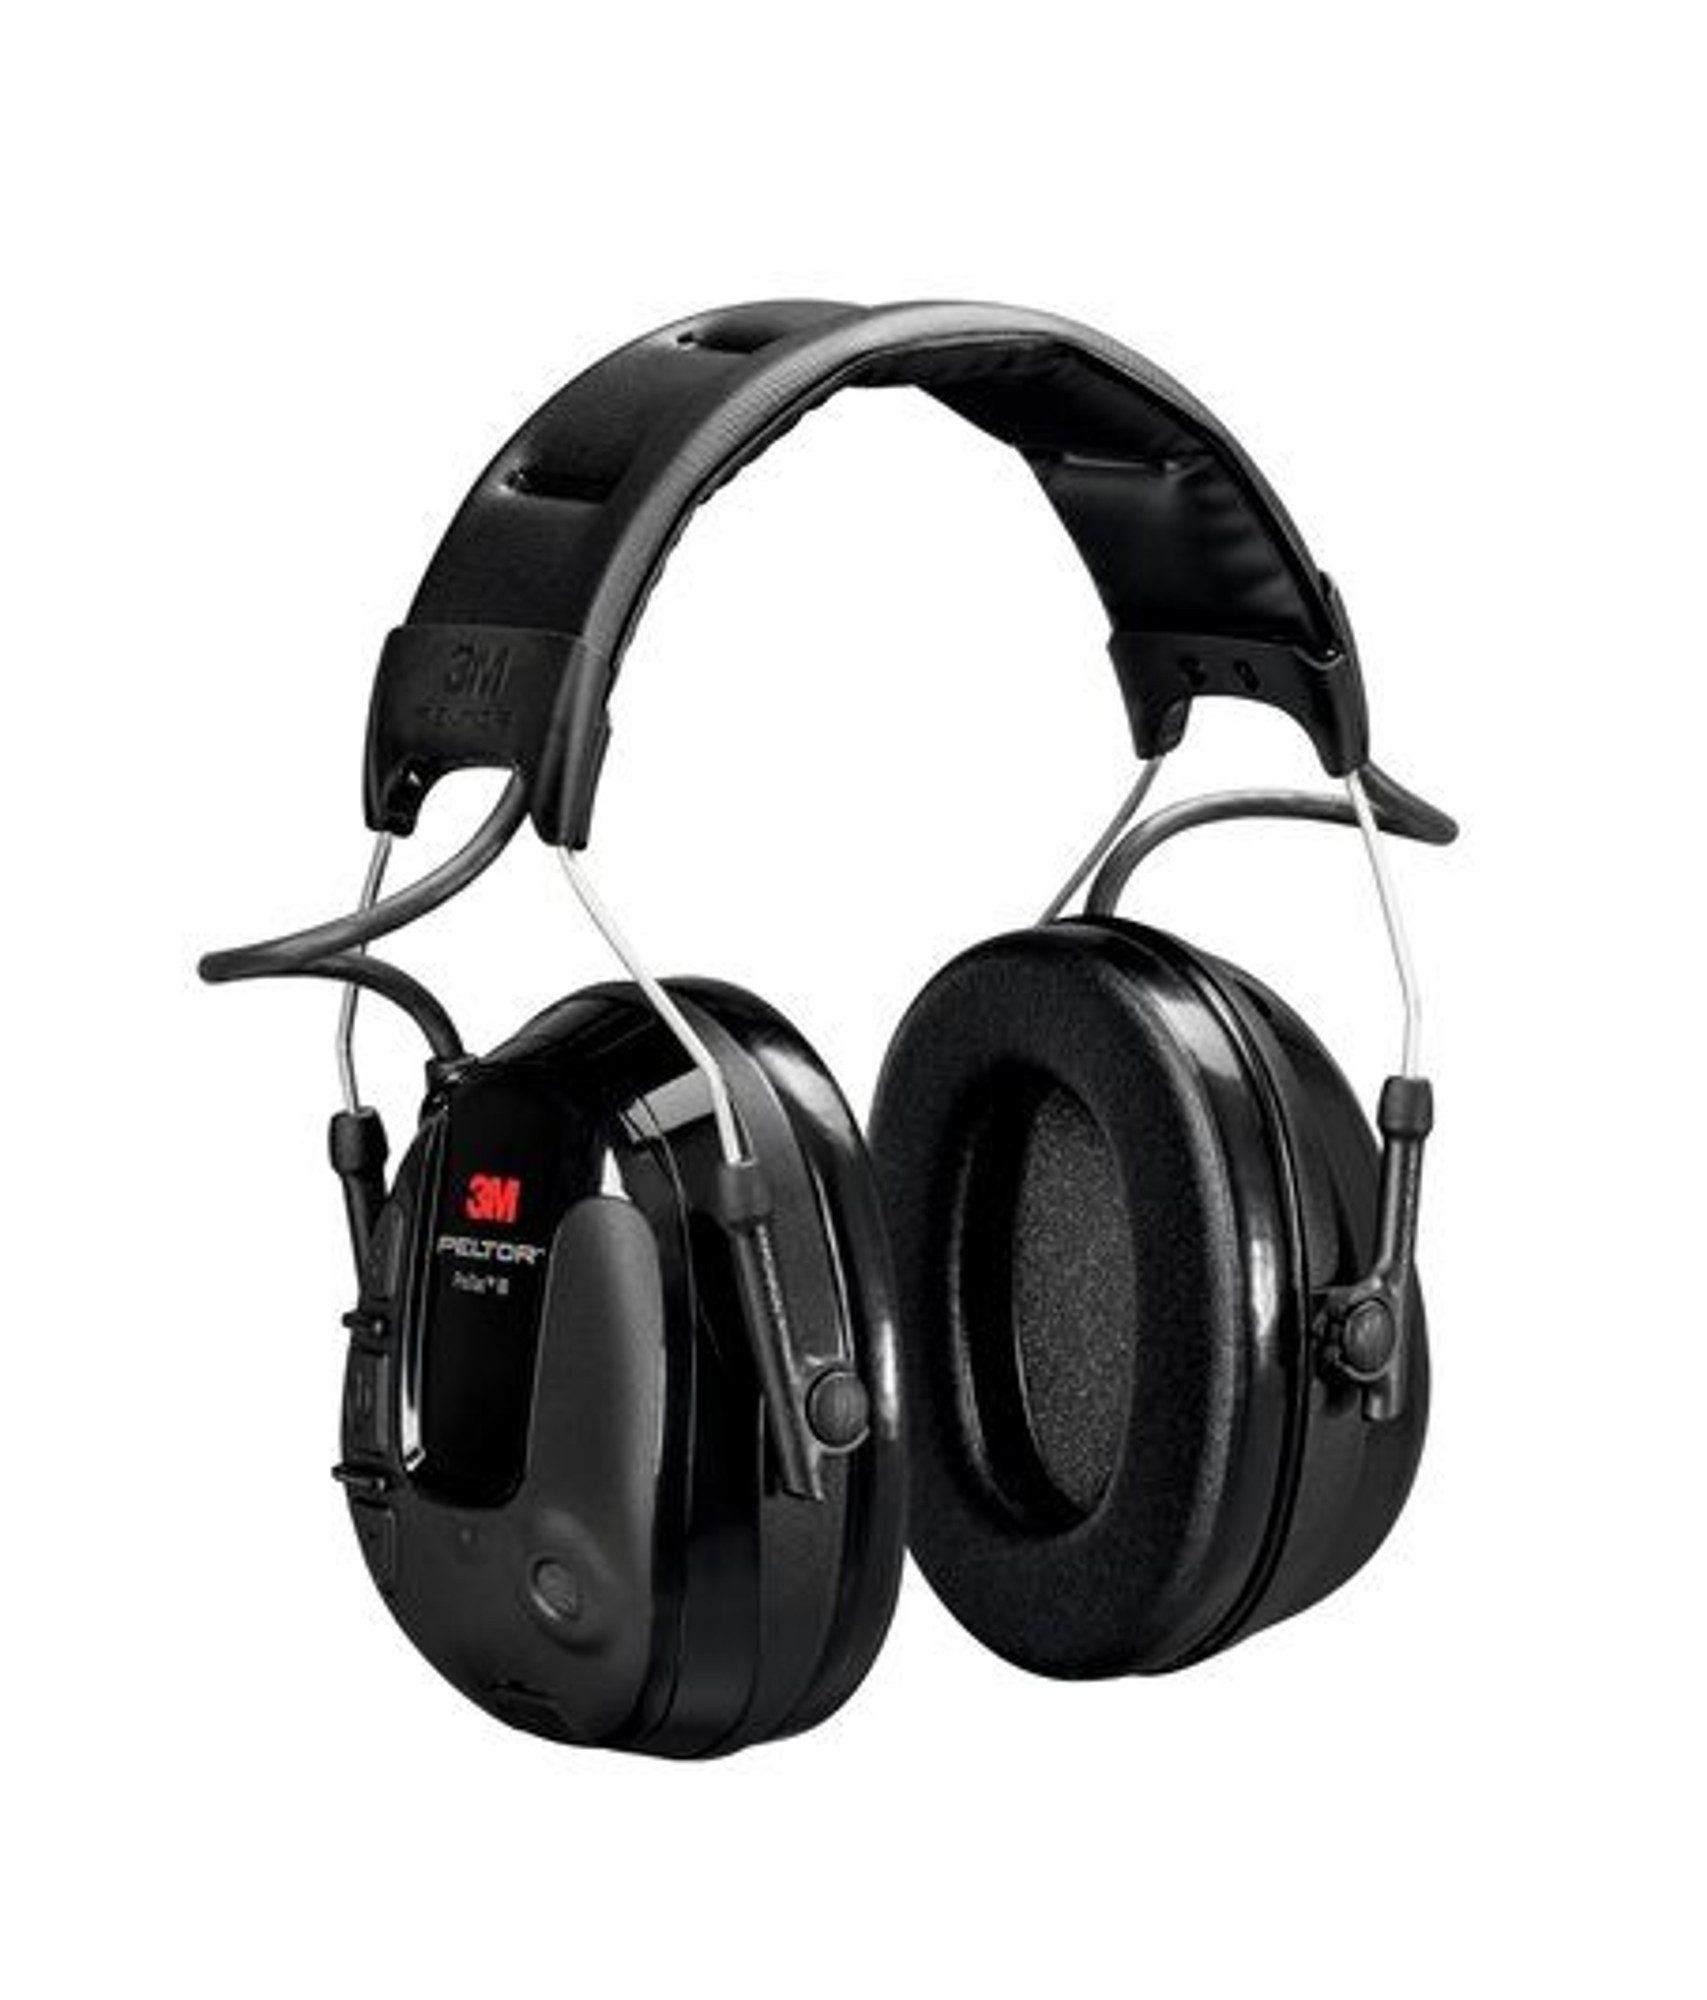 3M™ PELTOR™ III Slim Headset - Your Ears